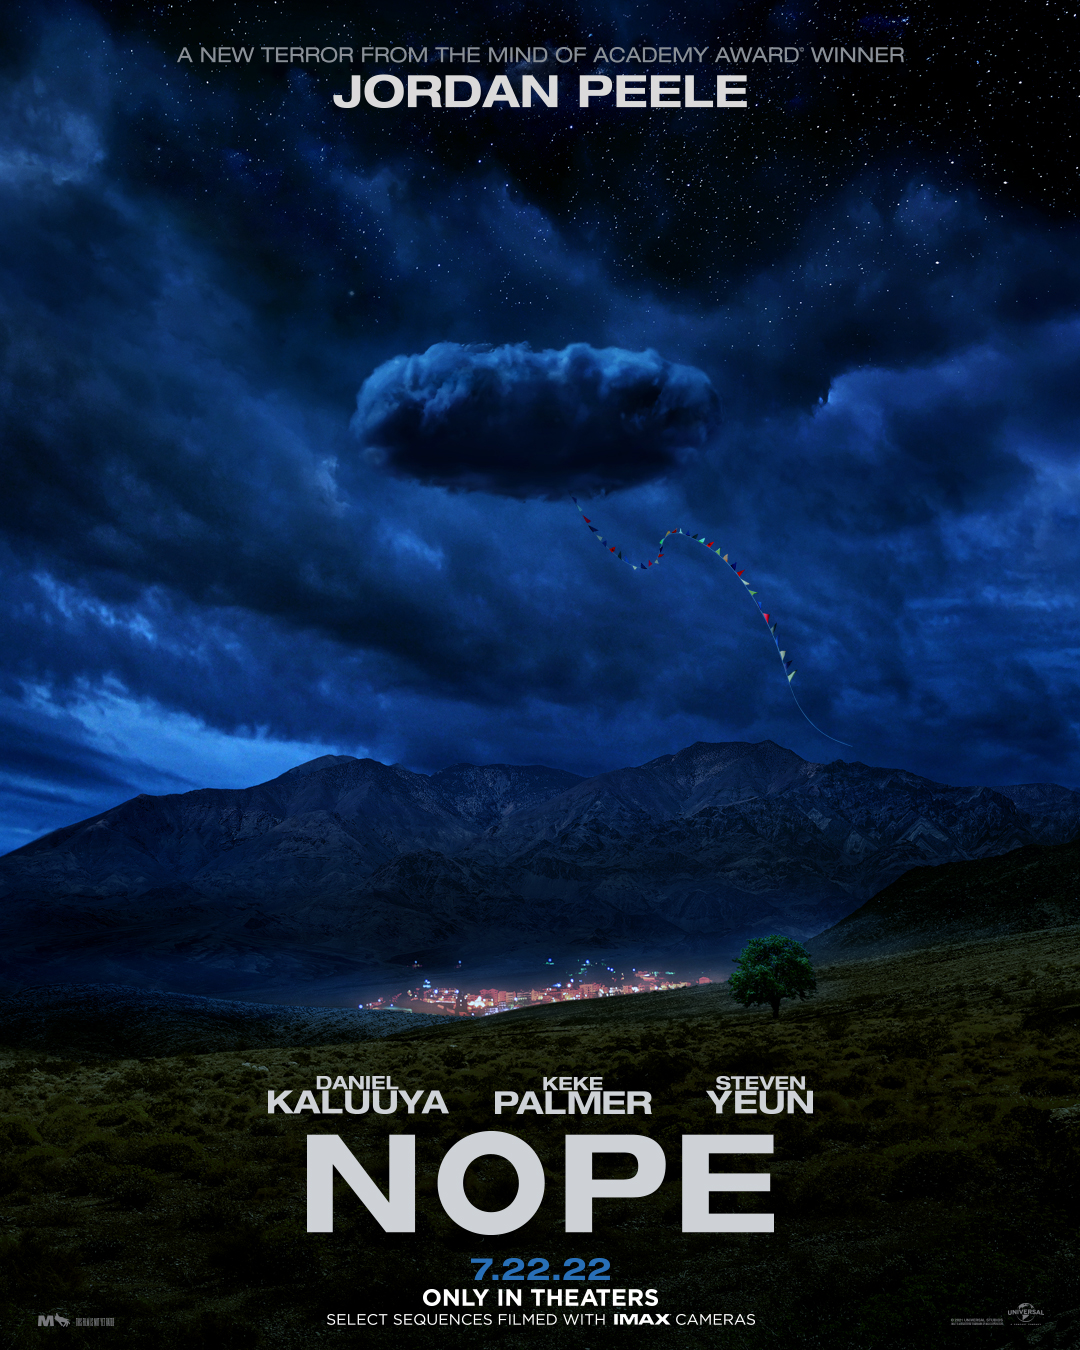 NOPE trailer poster